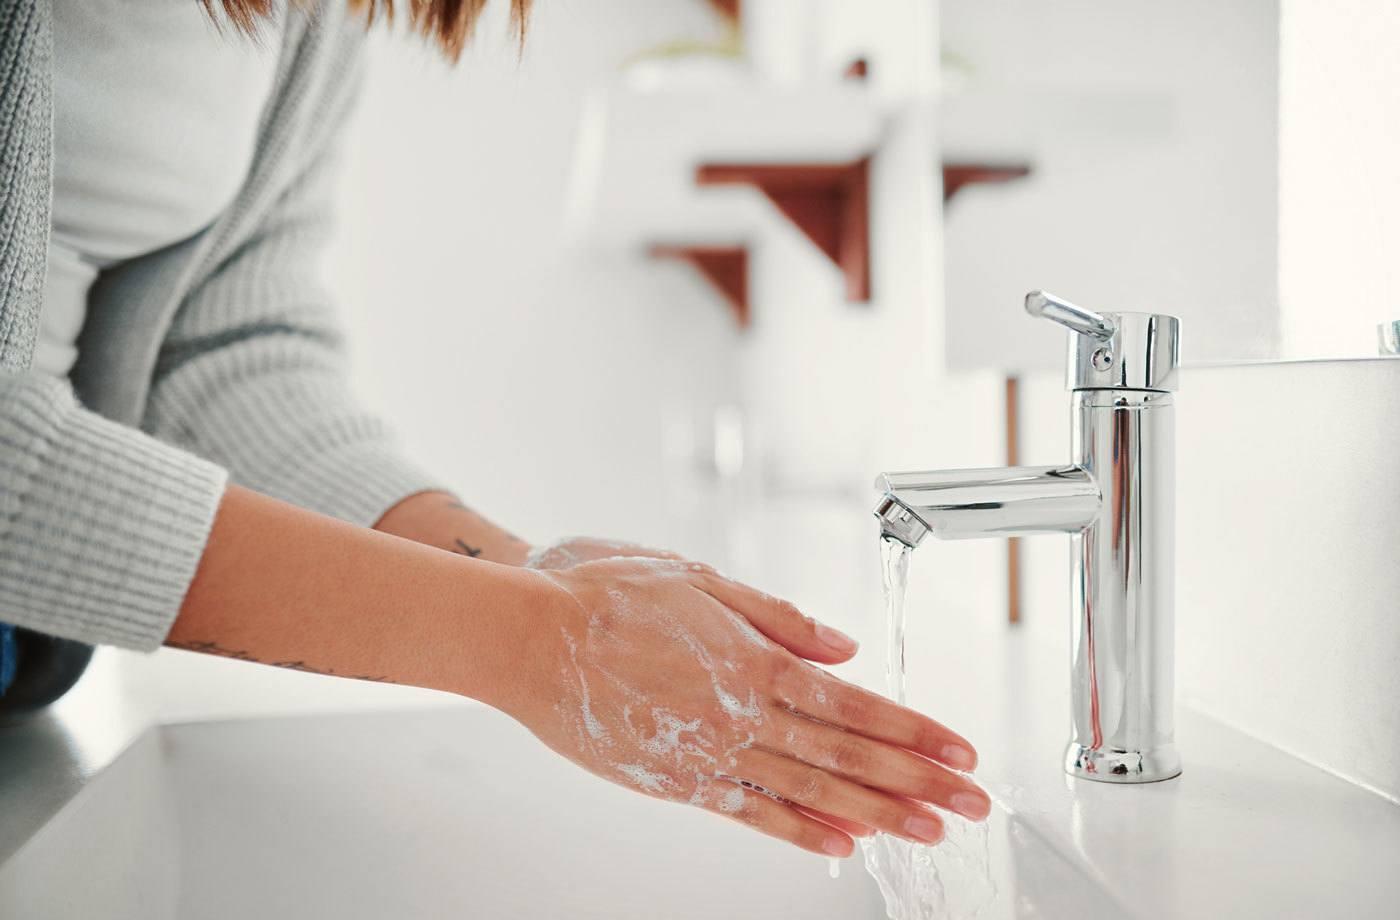 Samo 50 posto ljudi pere ruke nakon odlaska u toalet - Avaz